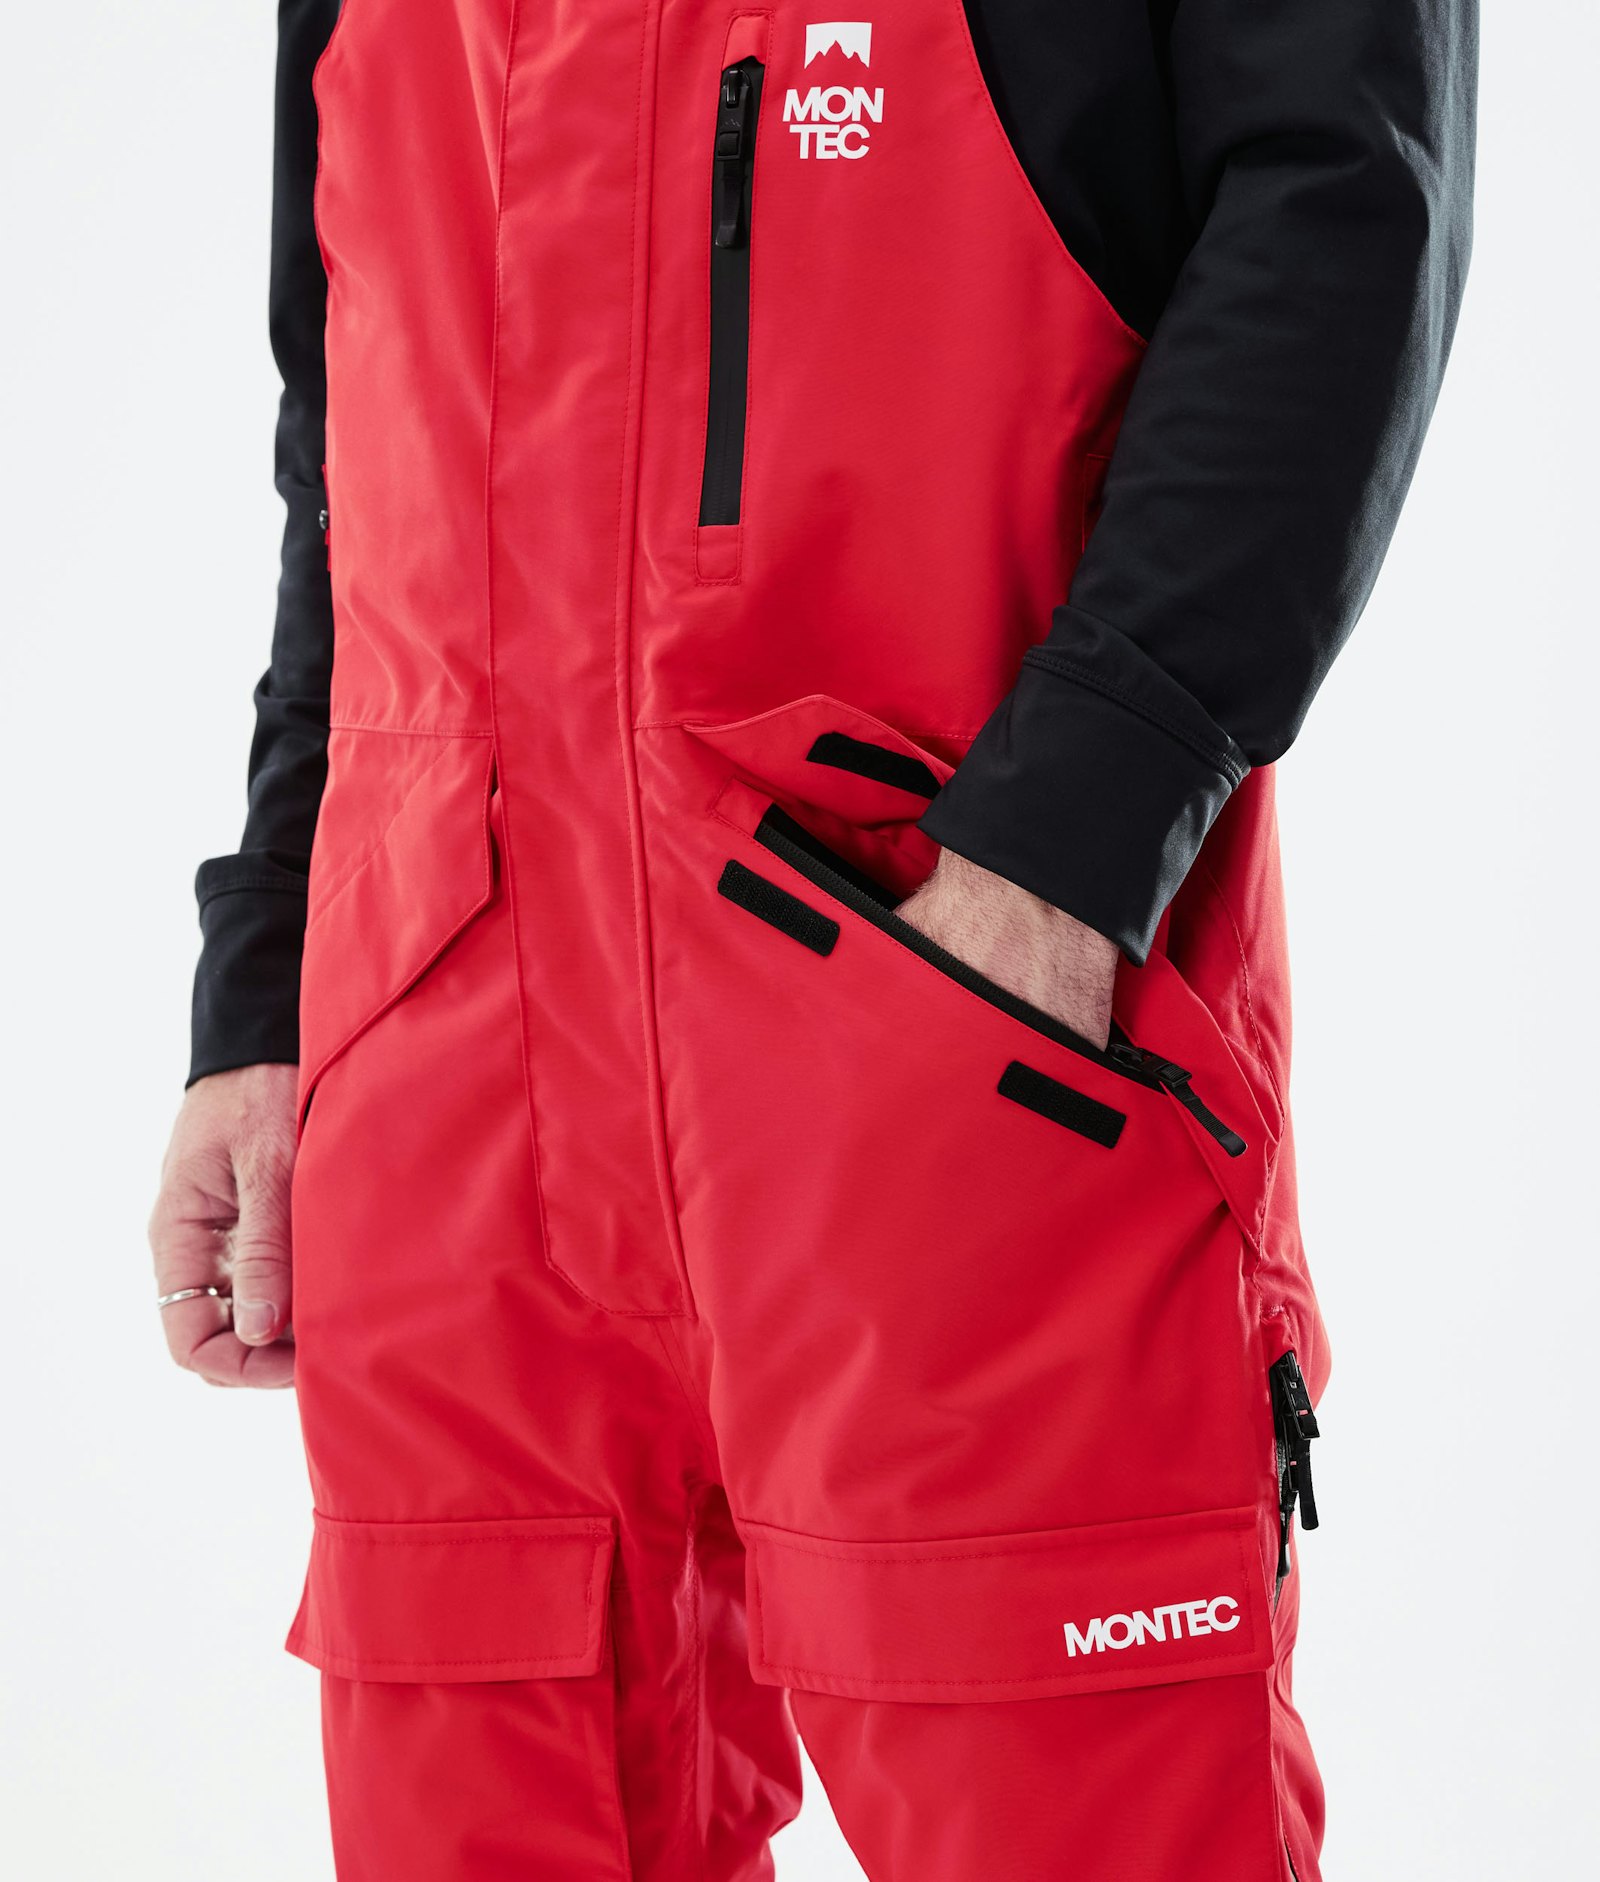 Fawk 2021 Snowboard Pants Men Red